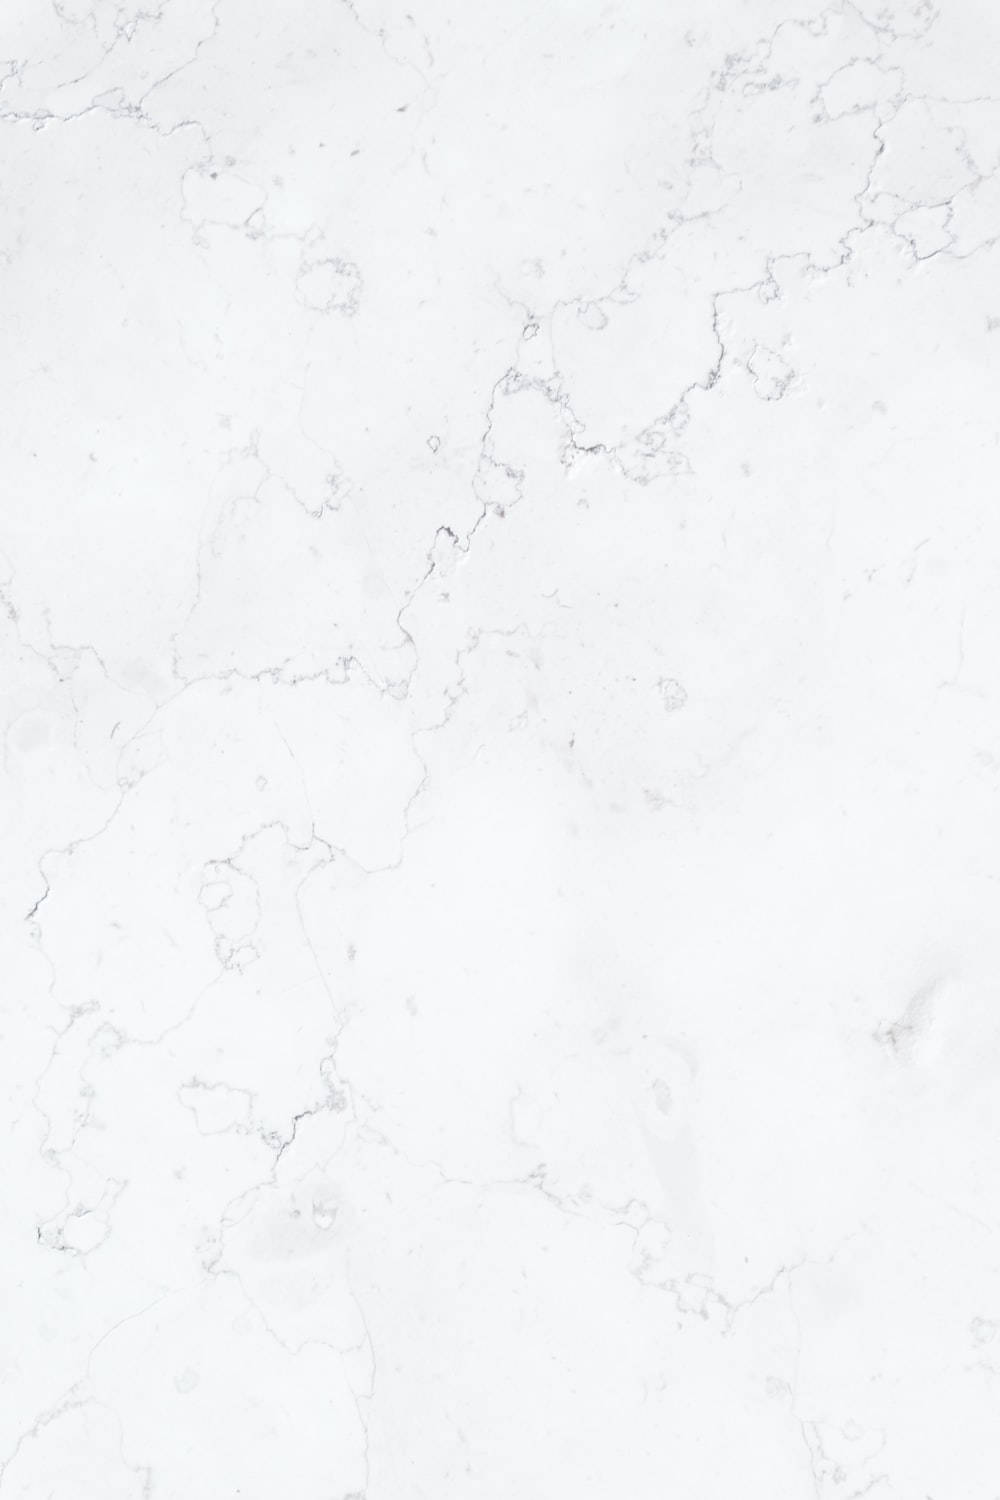 Classic Carrara Black White Marble Iphone Background